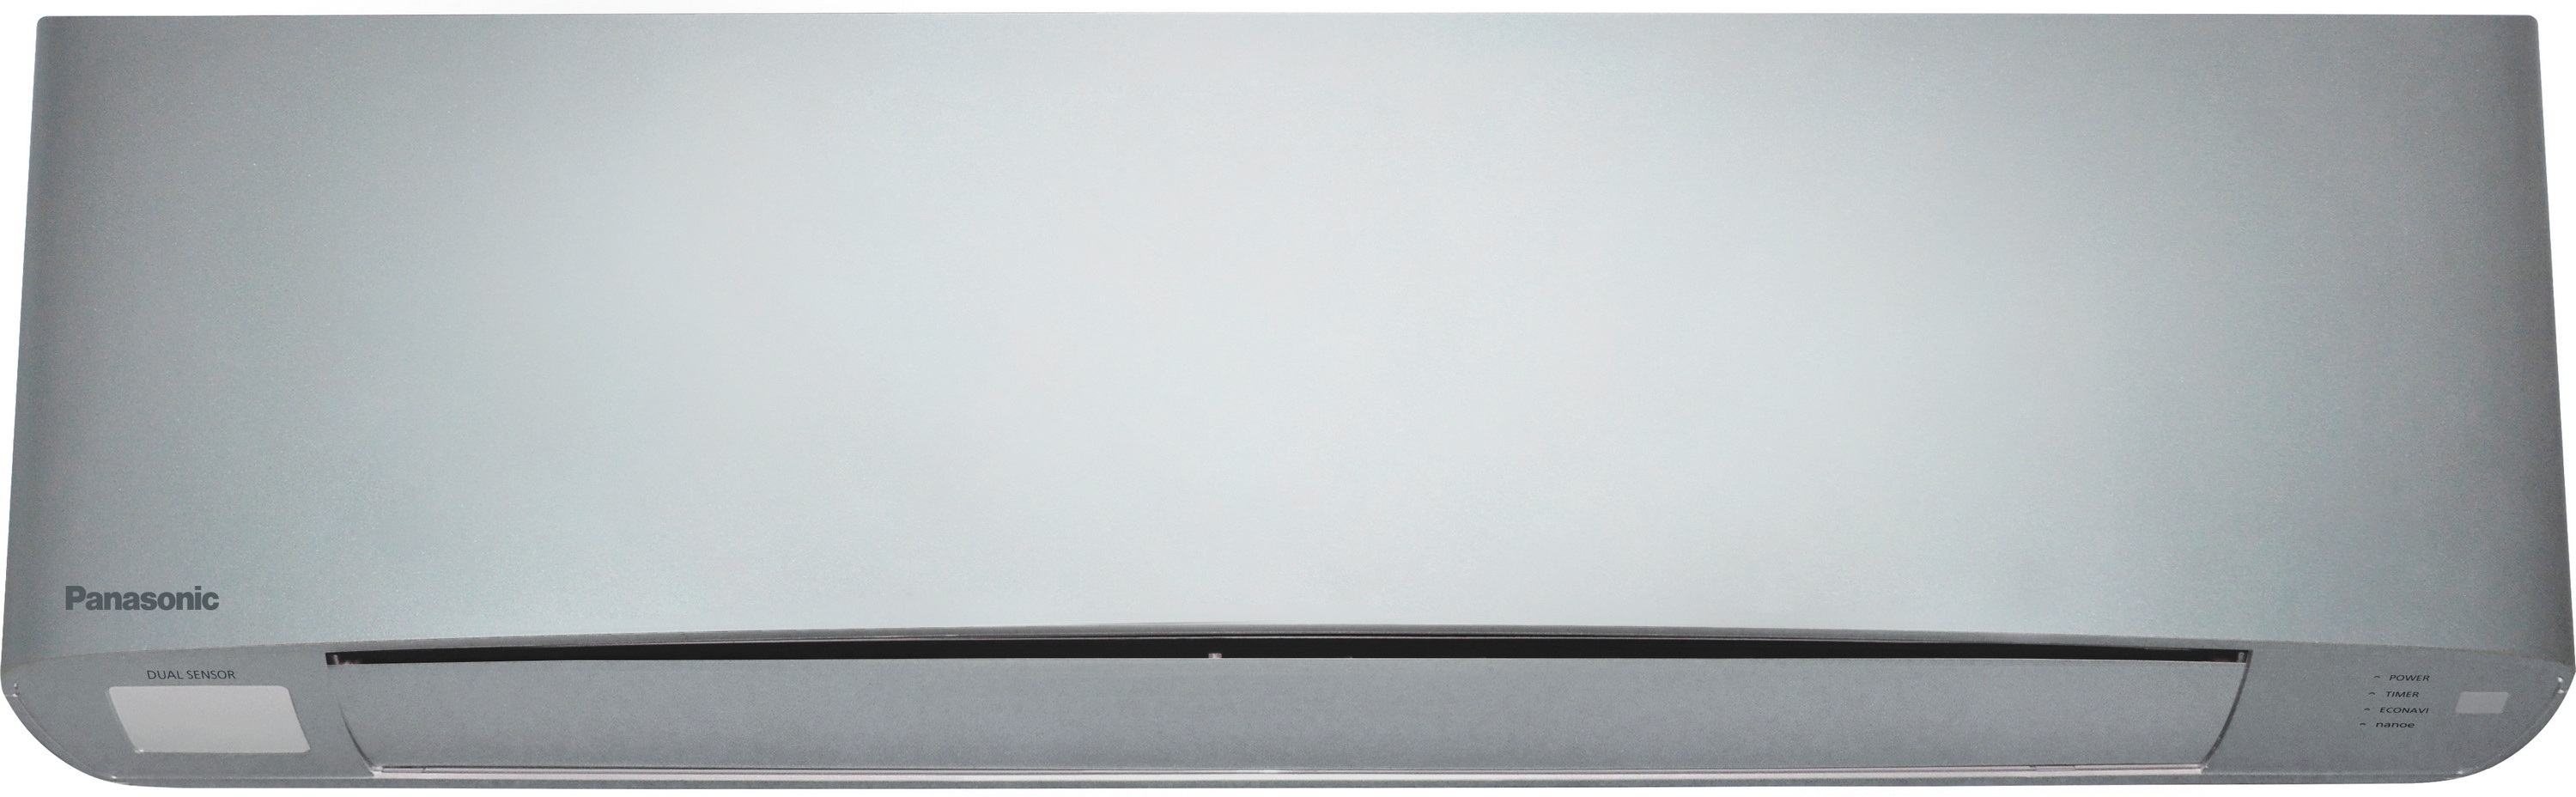 Внутренний блок мультисплит-системы Panasonic Flagship Silver CS-XZ50TKEW цена 69999.00 грн - фотография 2